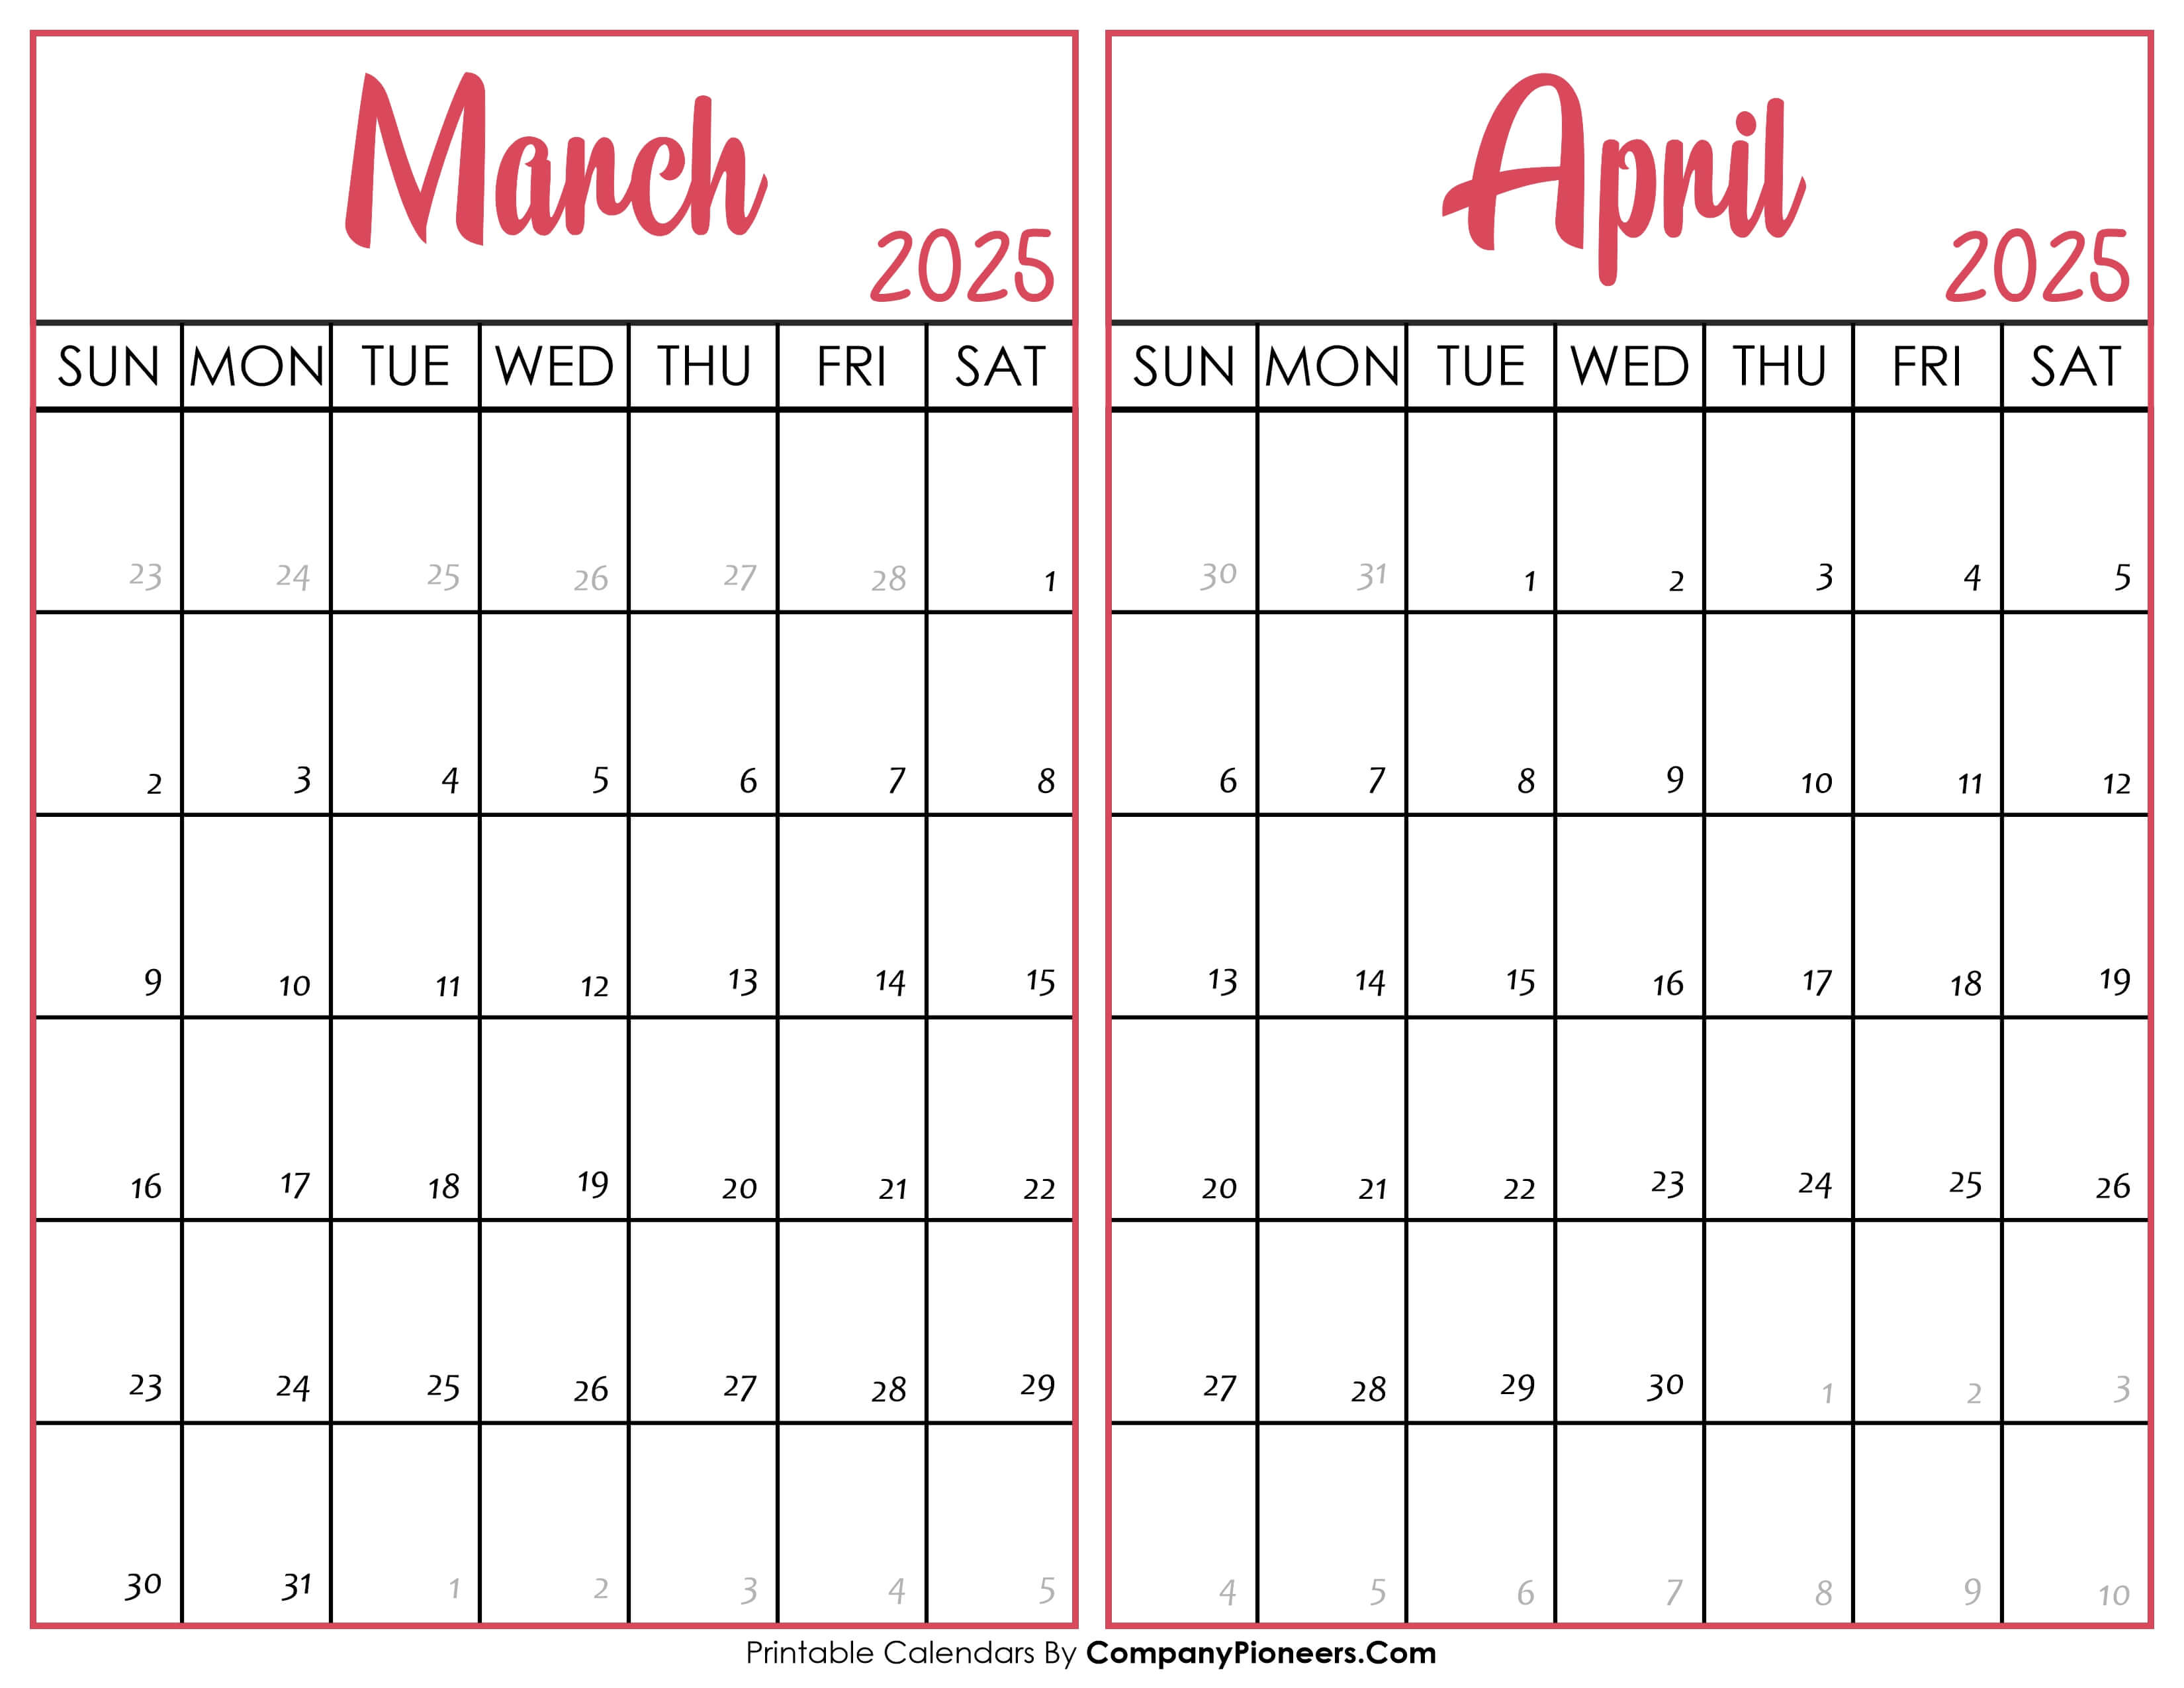 March and April Calendar 2025